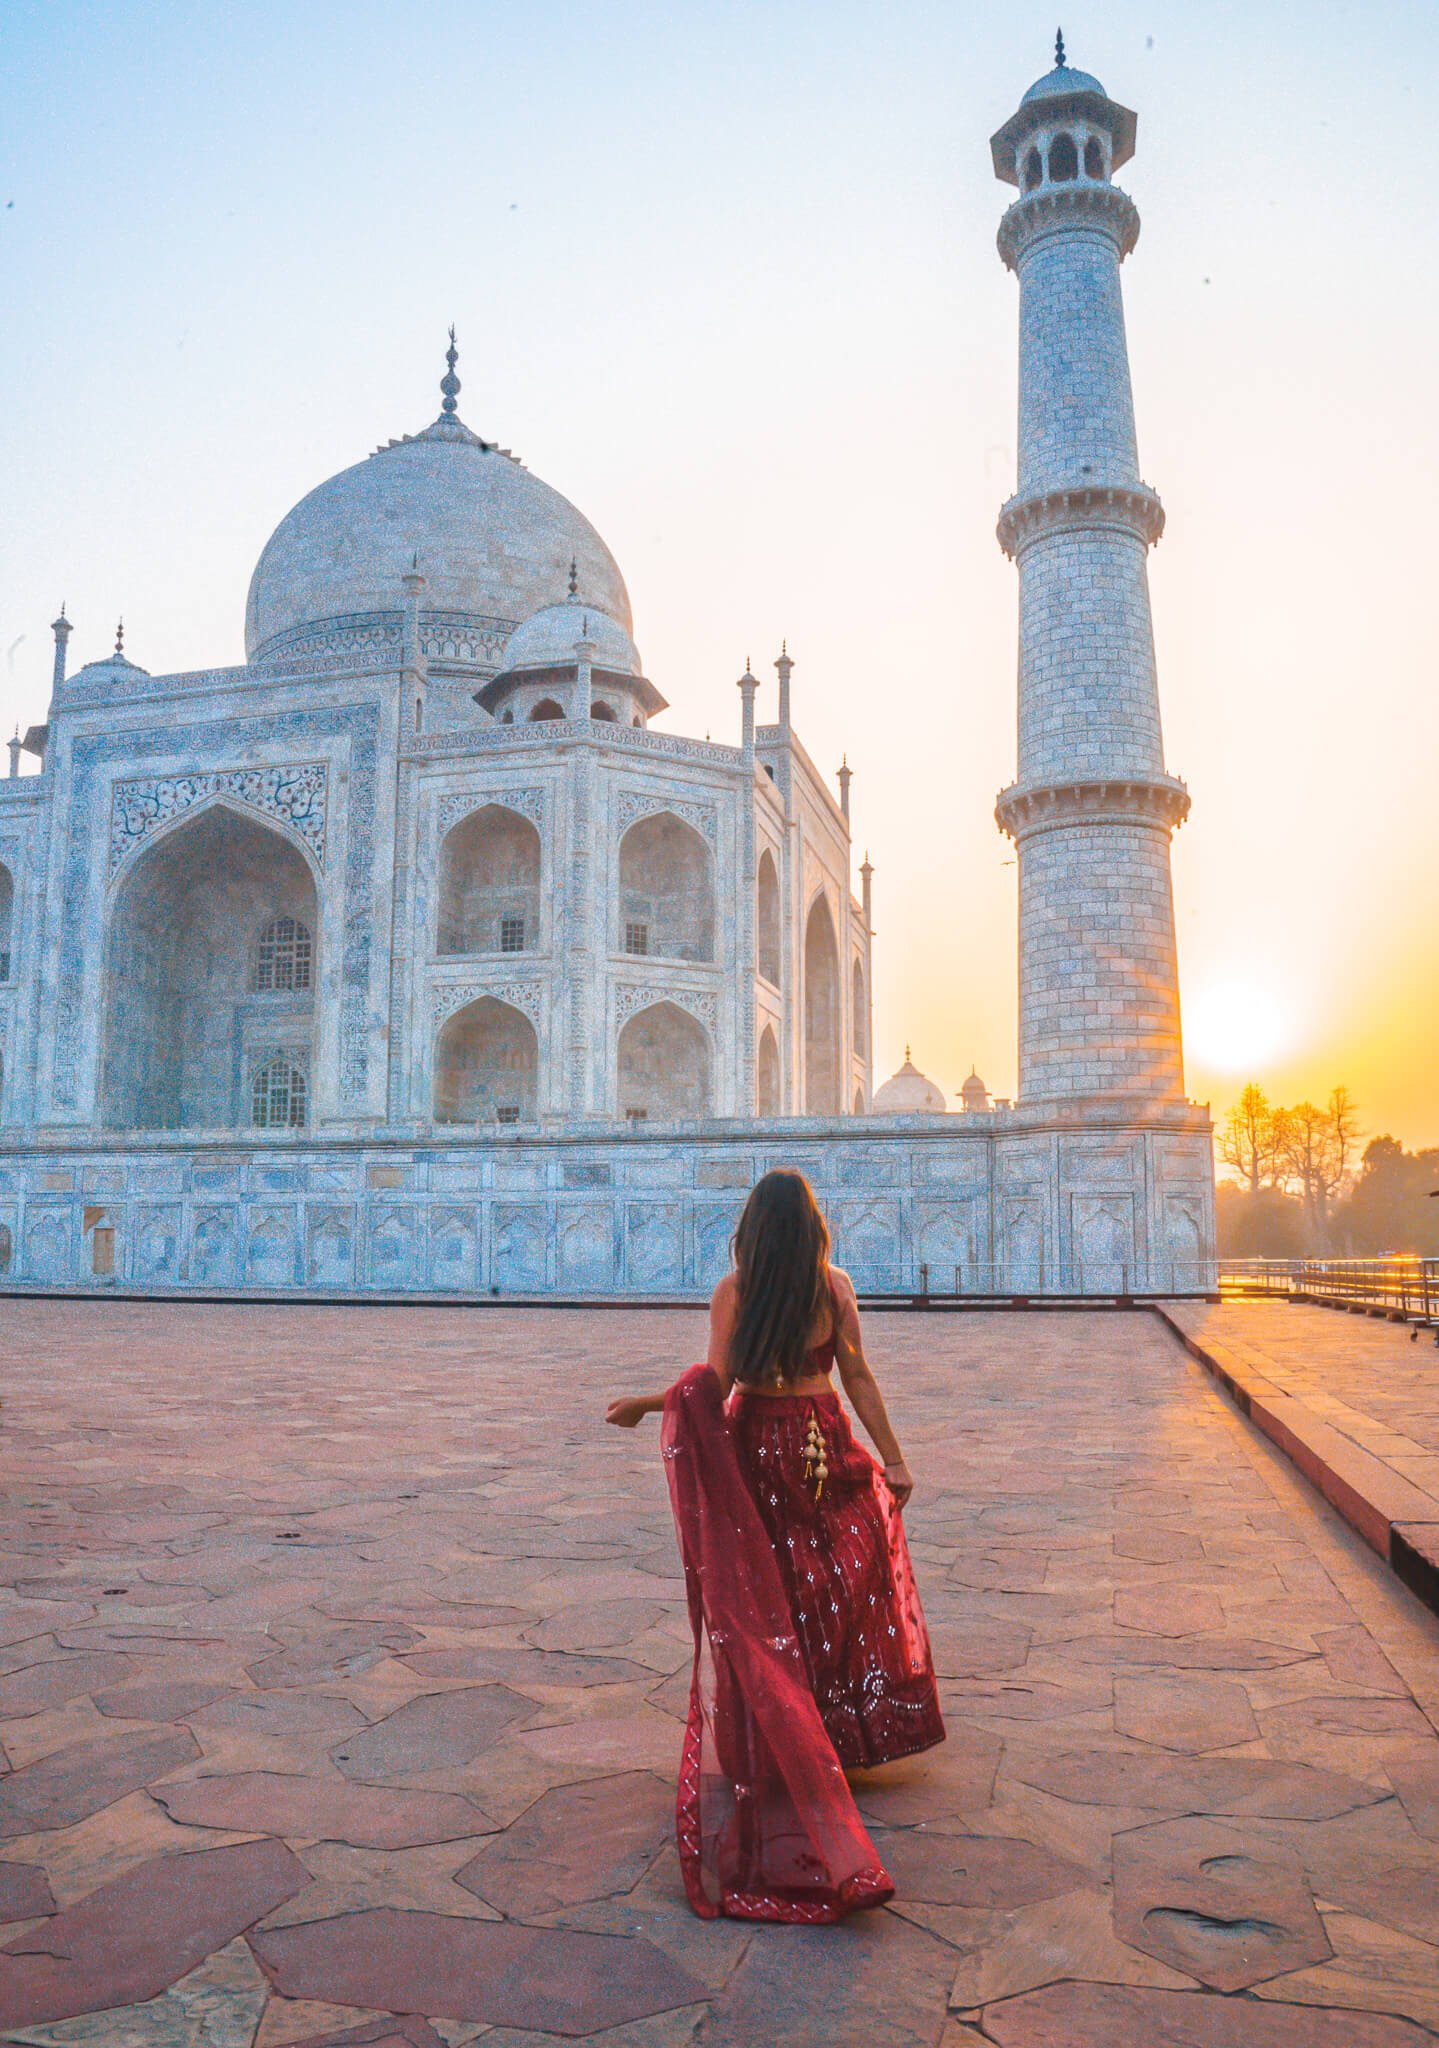 Taj Mahal, city of Agra, India